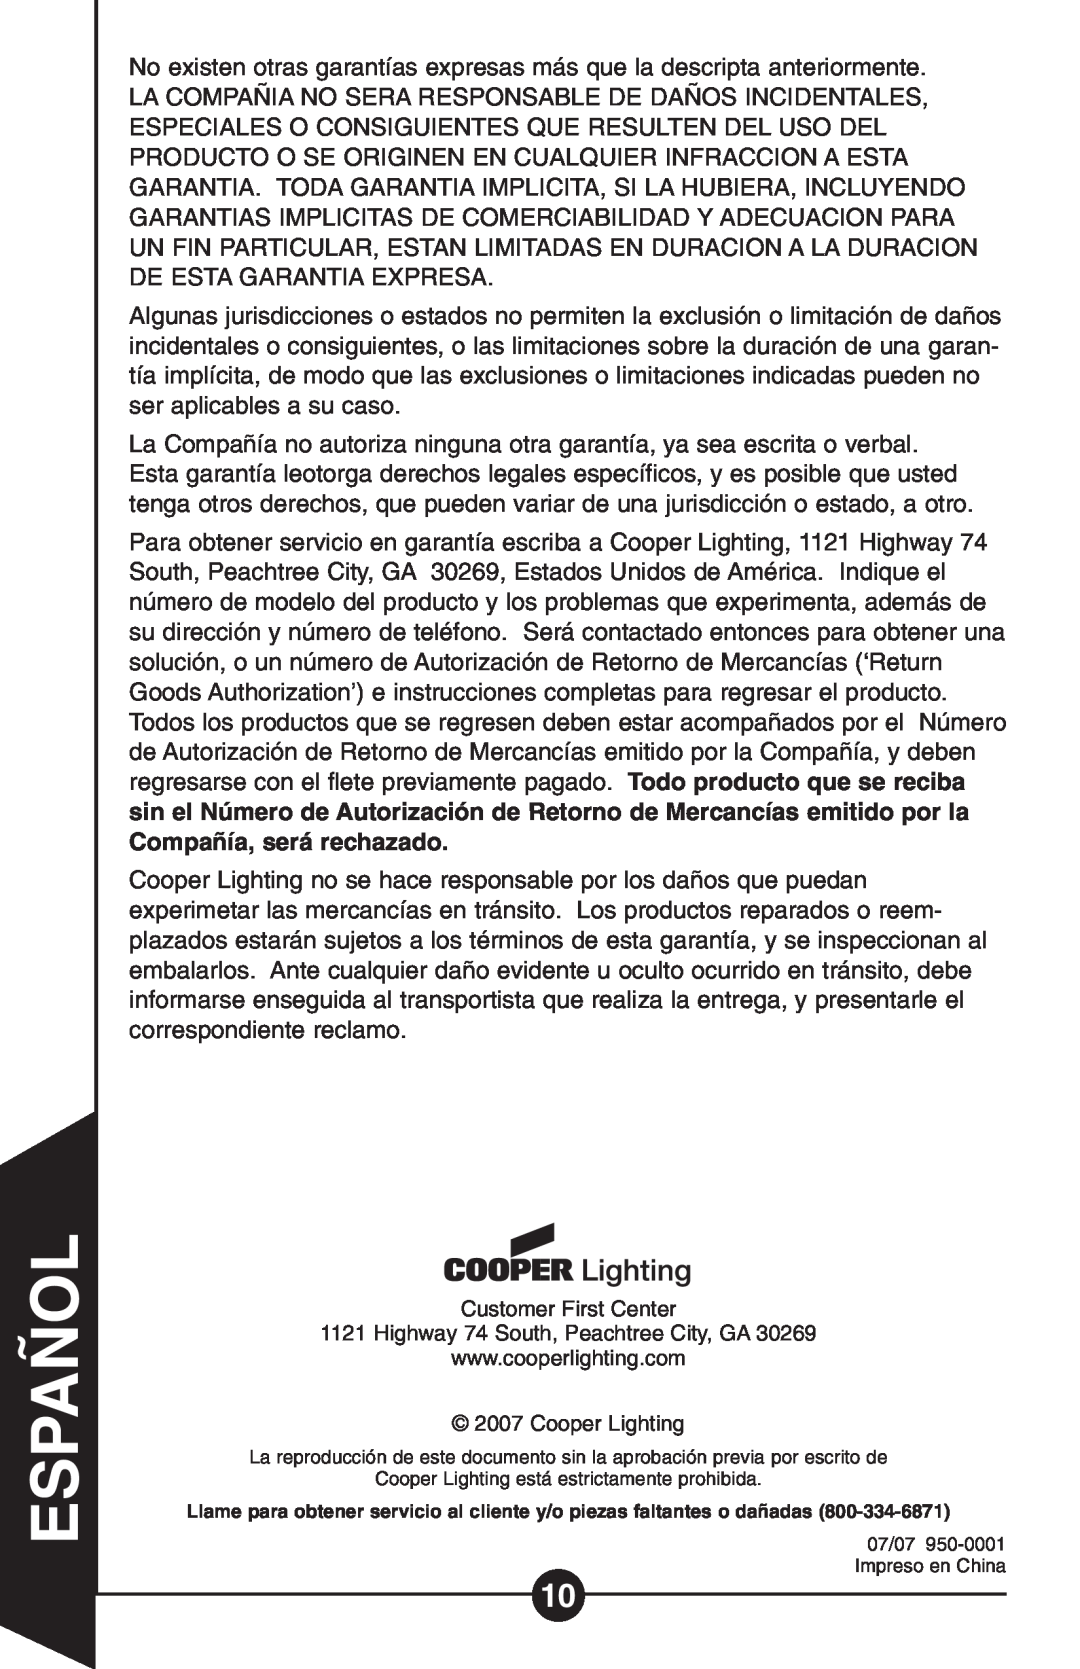 Cooper Lighting HS1R-C, Hs 1r instruction manual Español, Customer First Center, Highway 74 South, Peachtree City, GA 